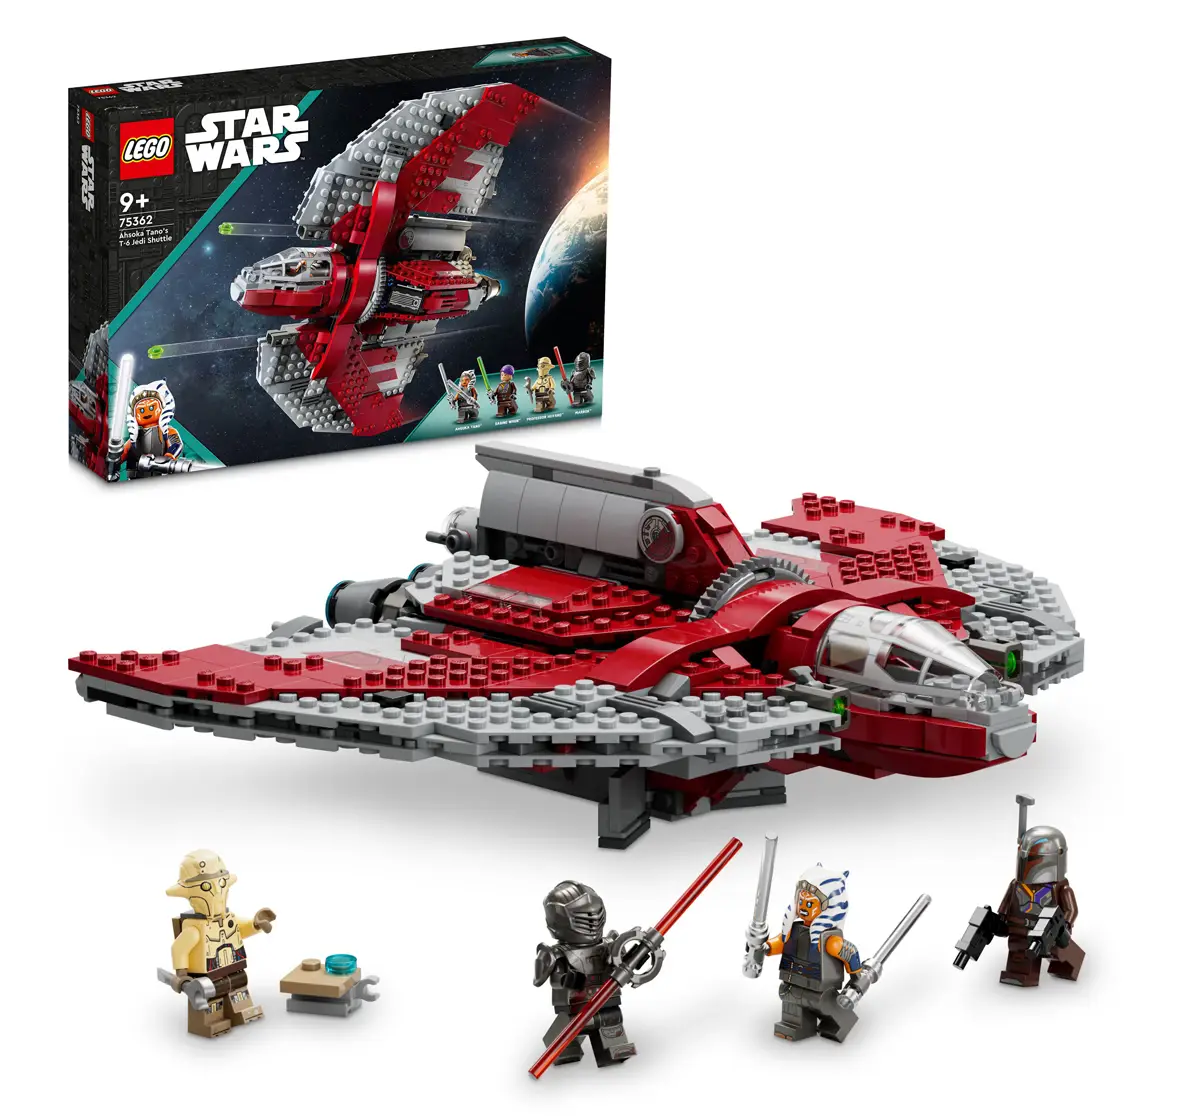 LEGO Star Wars Ahsoka Tanos T-6 Jedi Shuttle 75362 Building Toy Set (601 Pieces)